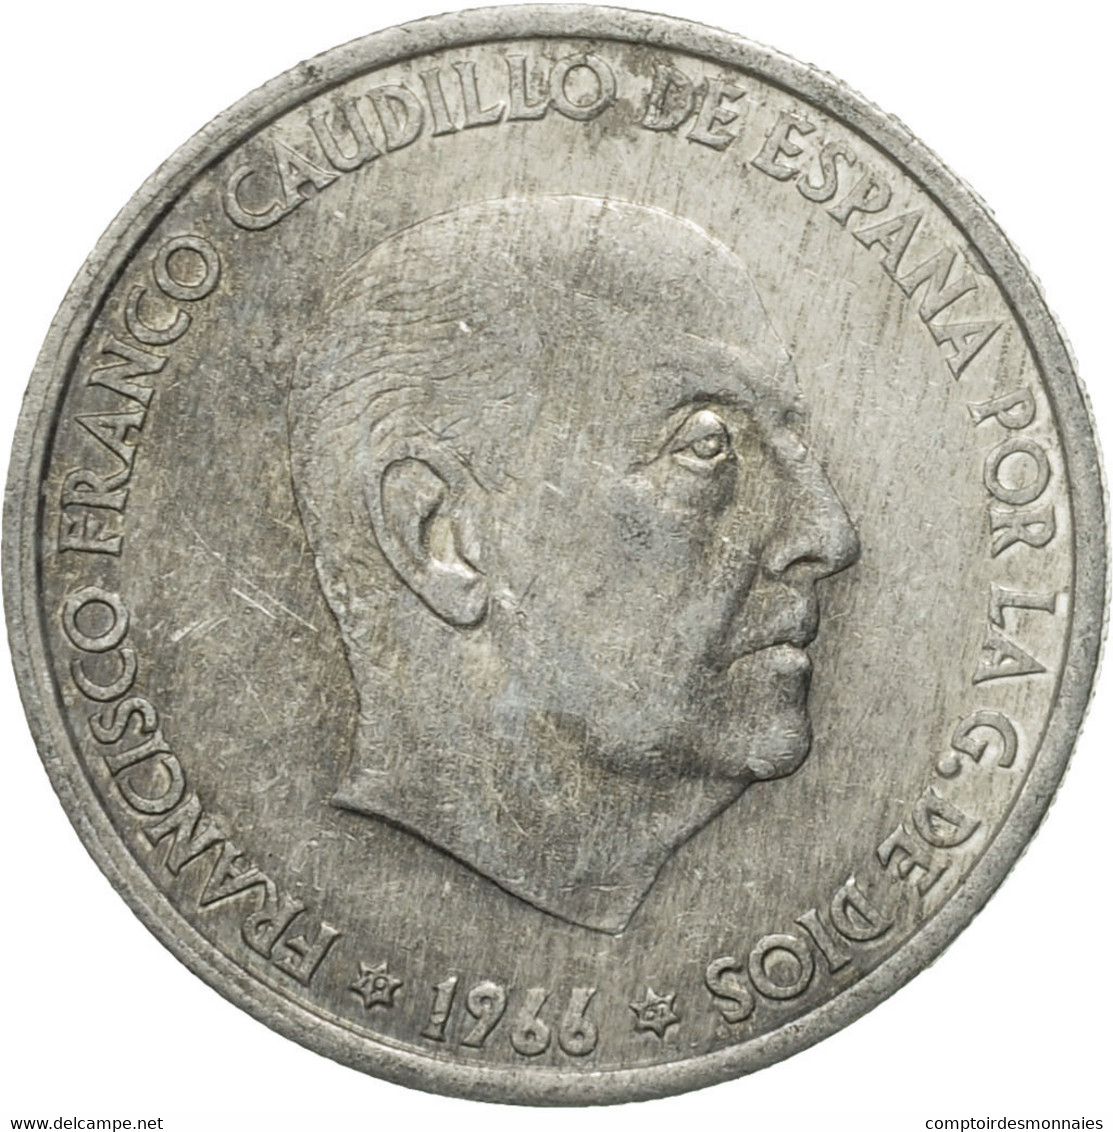 Monnaie, Espagne, Francisco Franco, Caudillo, 50 Centimos, 1967, TB, Aluminium - 50 Céntimos